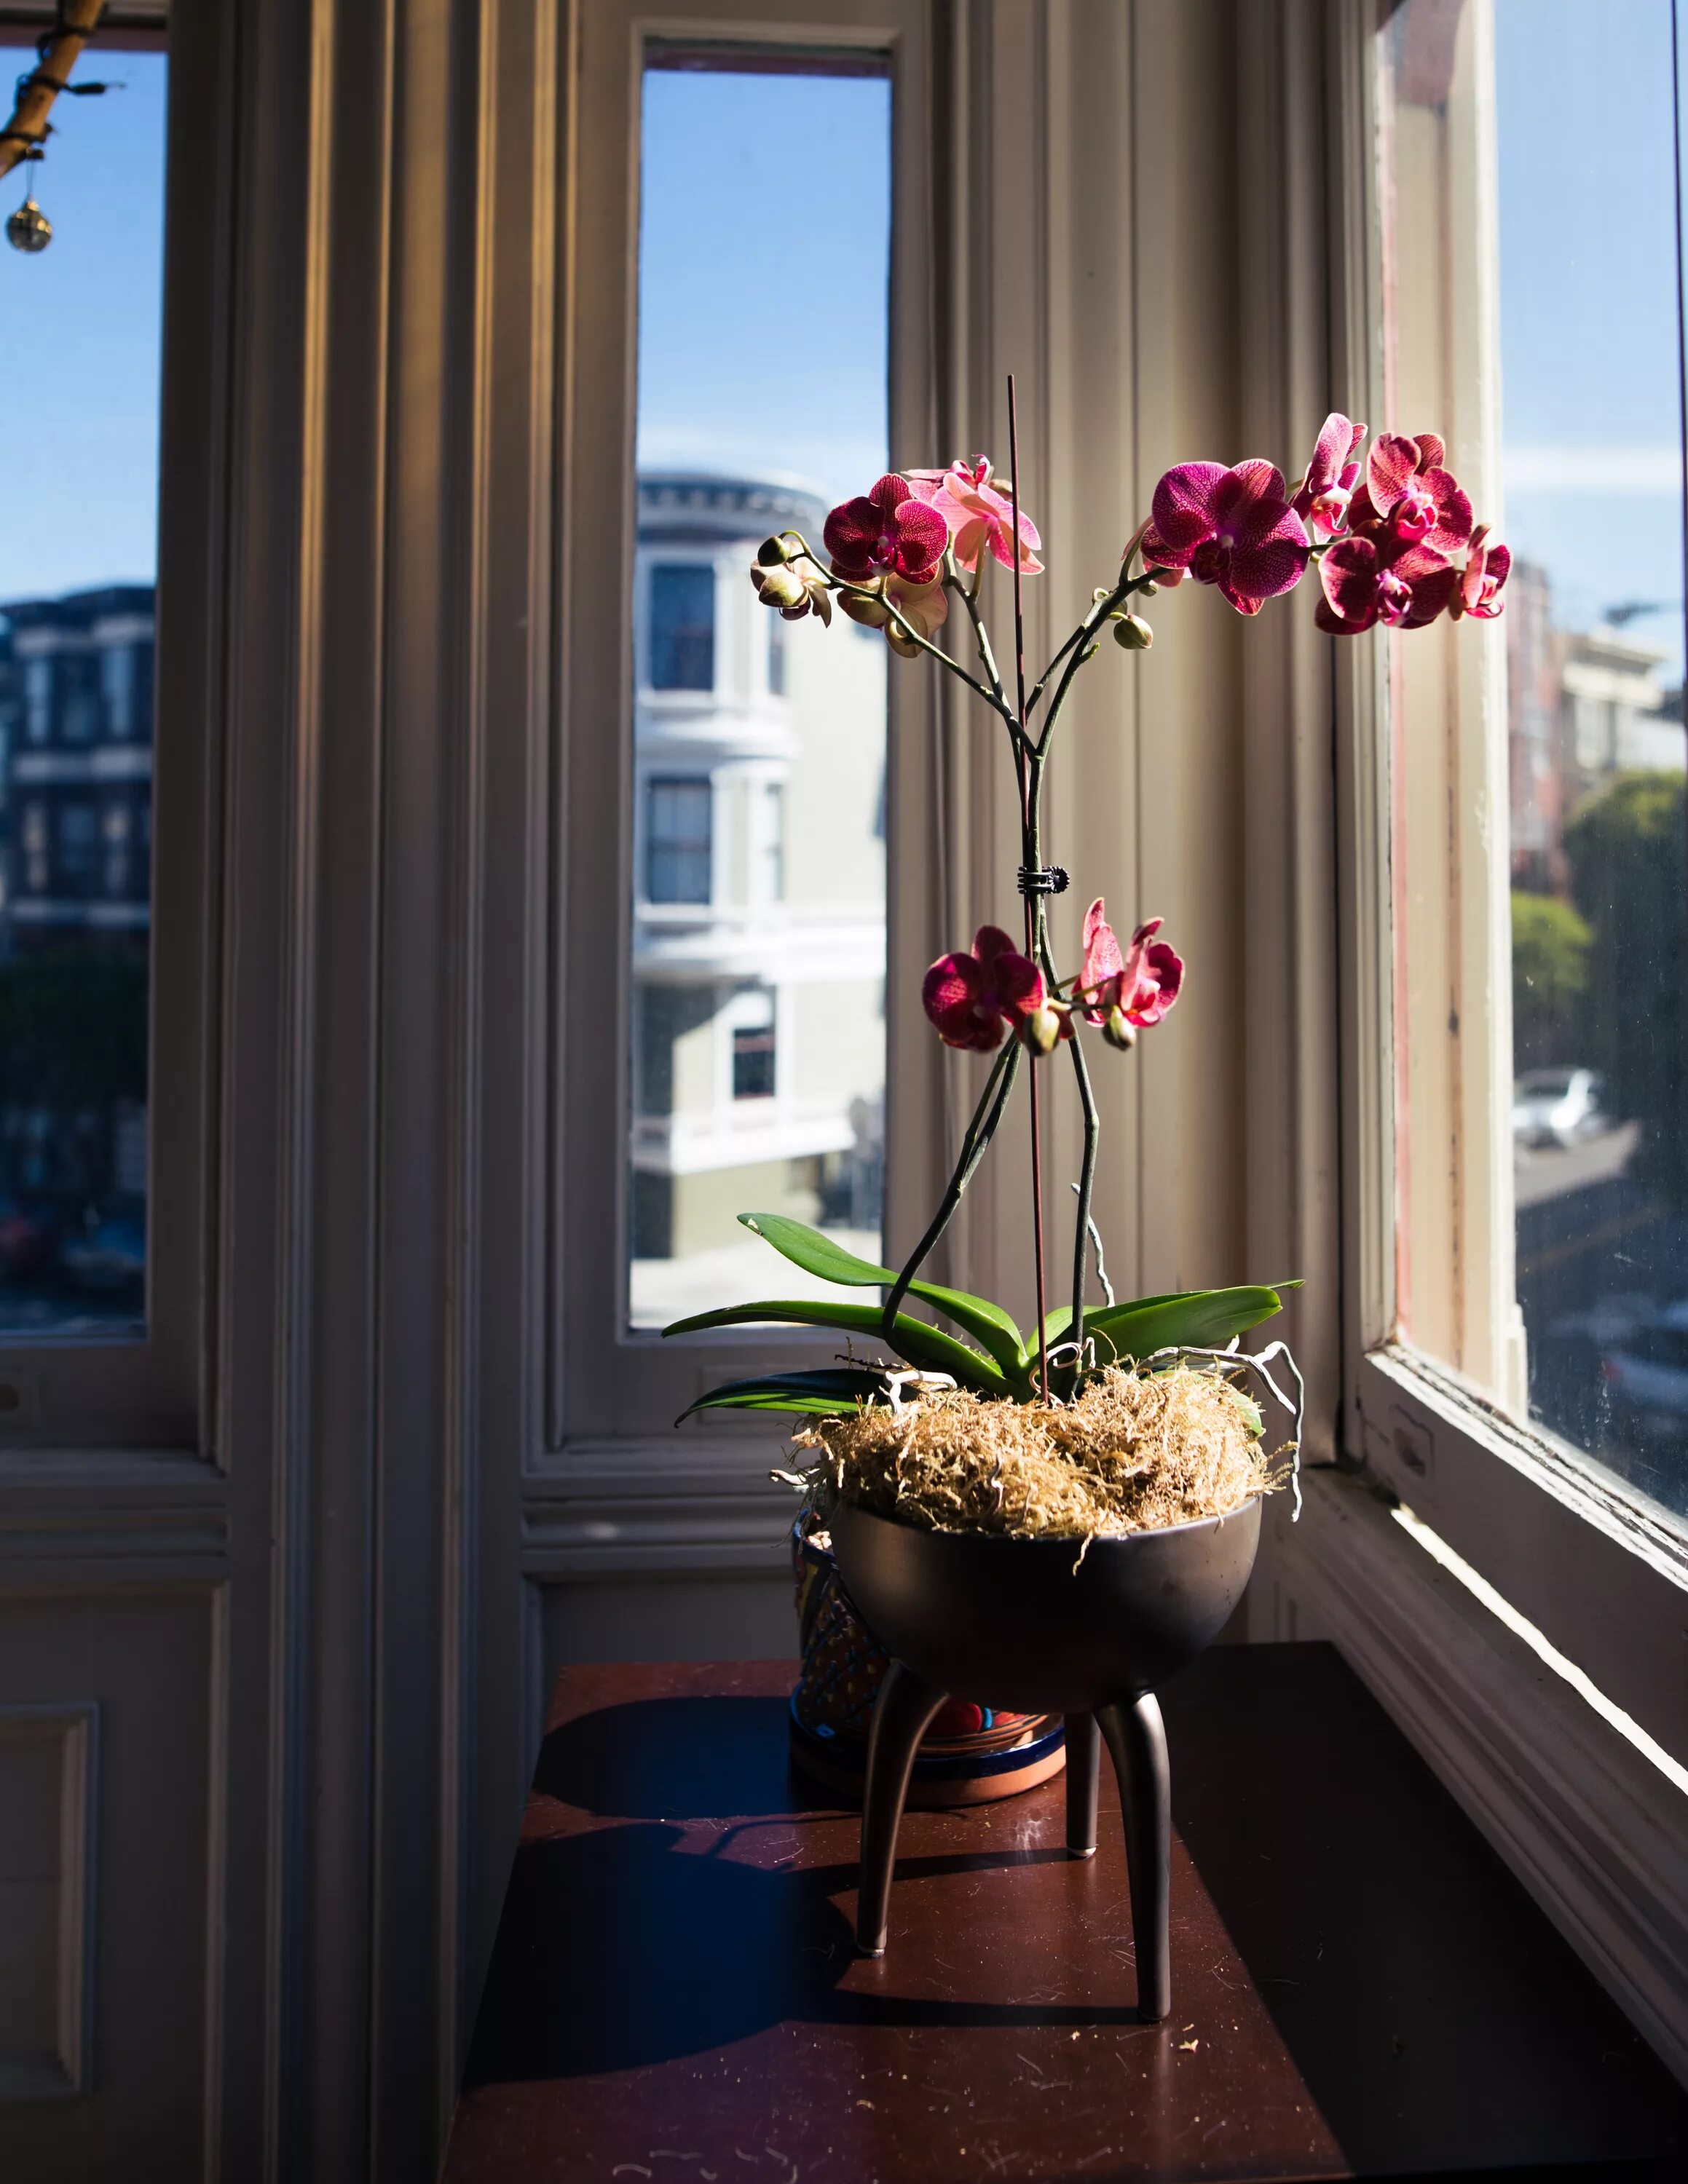 Цветы на подоконнике. Цветок в горшке на подоконнике. Подоконник с цветами. Комнатные растения на окне.